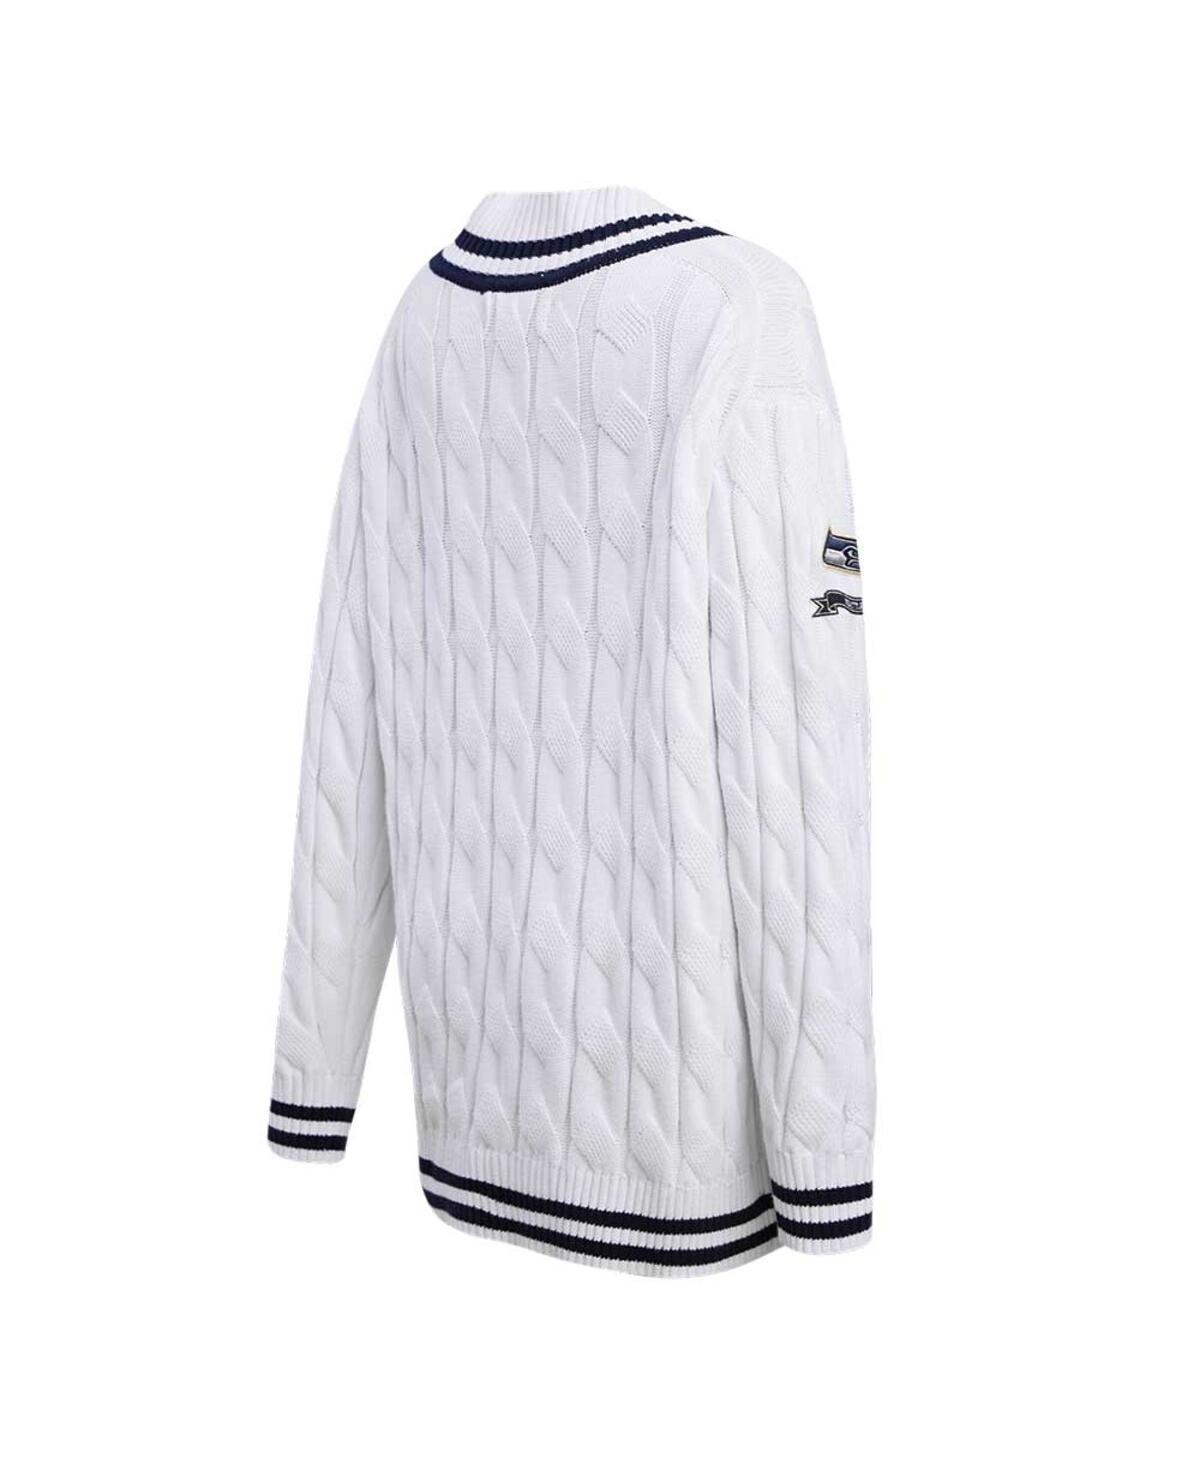 Shop Pro Standard Women's  White Seattle Seahawks Prep V-neck Pullover Sweater